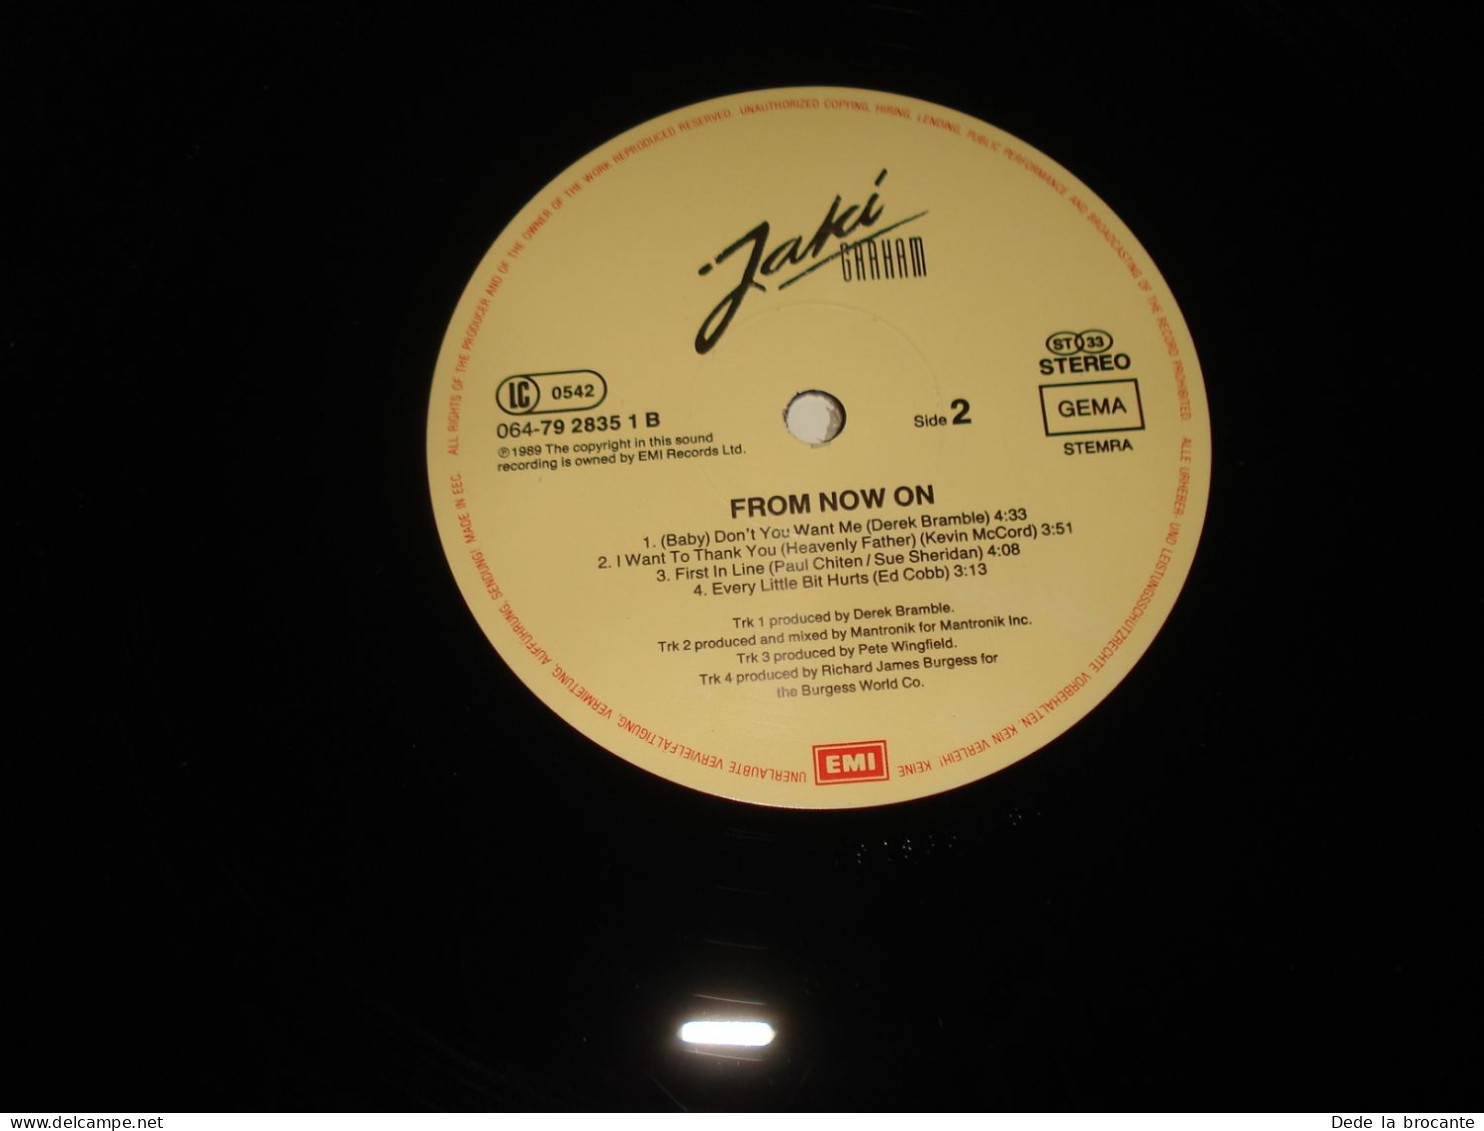 B13 / Jaki Graham – From Now On - EMI – 064 7 92835 1 - EUROPE 1989  EX/VG++ - Disco, Pop